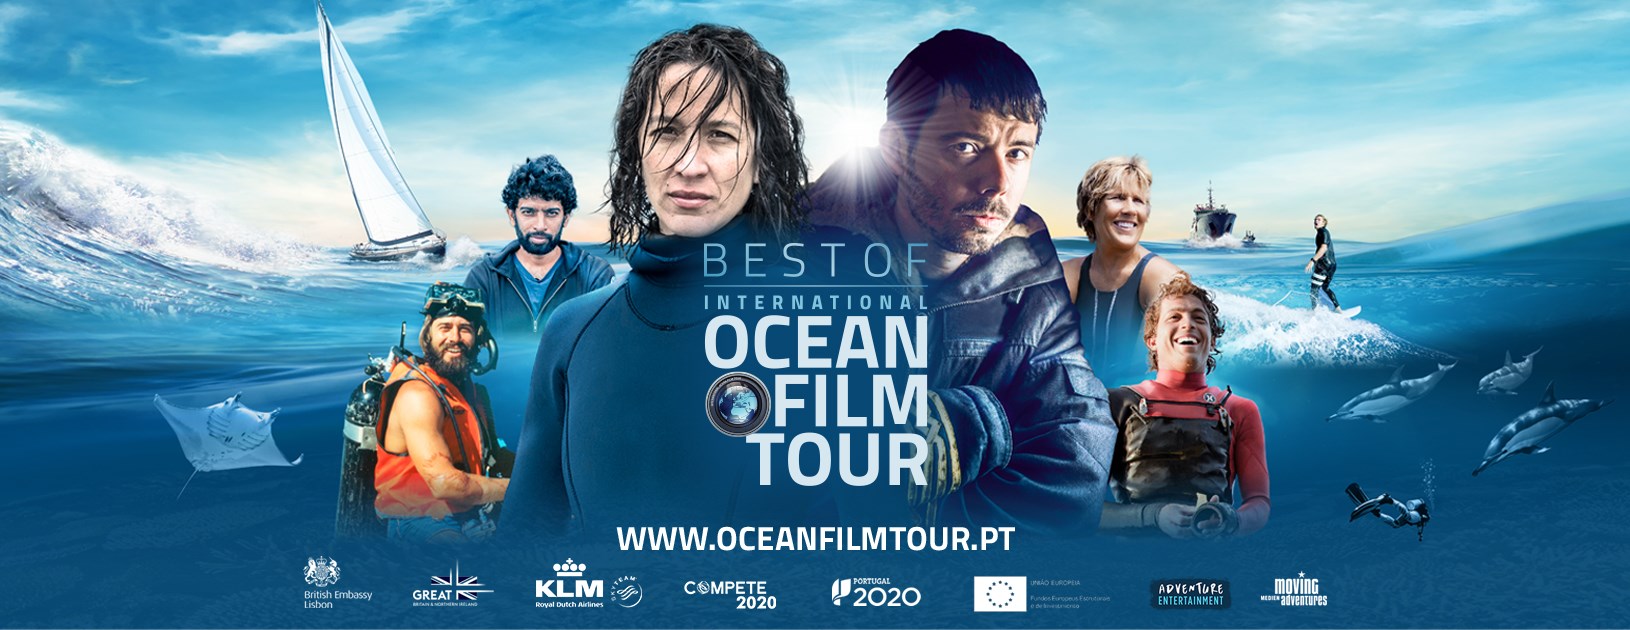 International Ocean Film Tour Best of - Porto